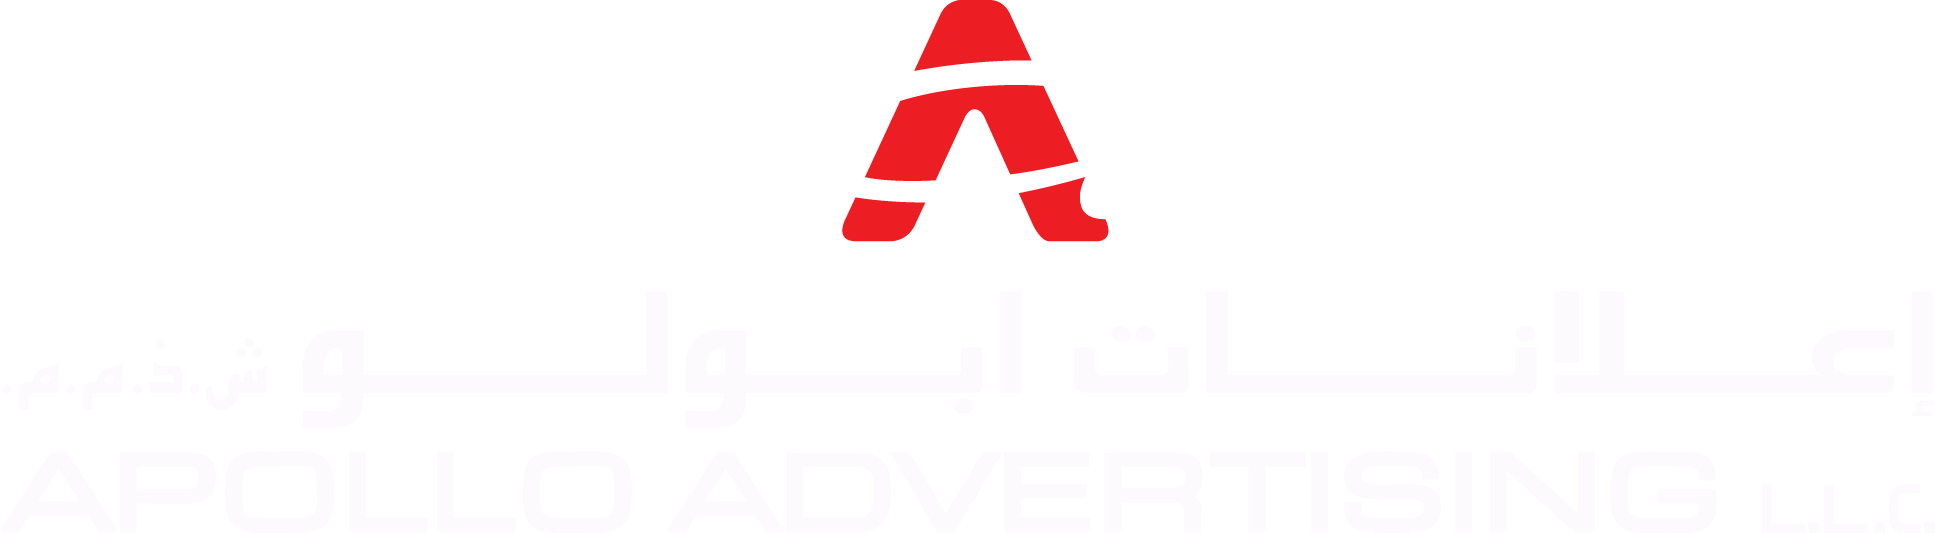 Apollo Advertising - Printing And Advertising Company In Dubai